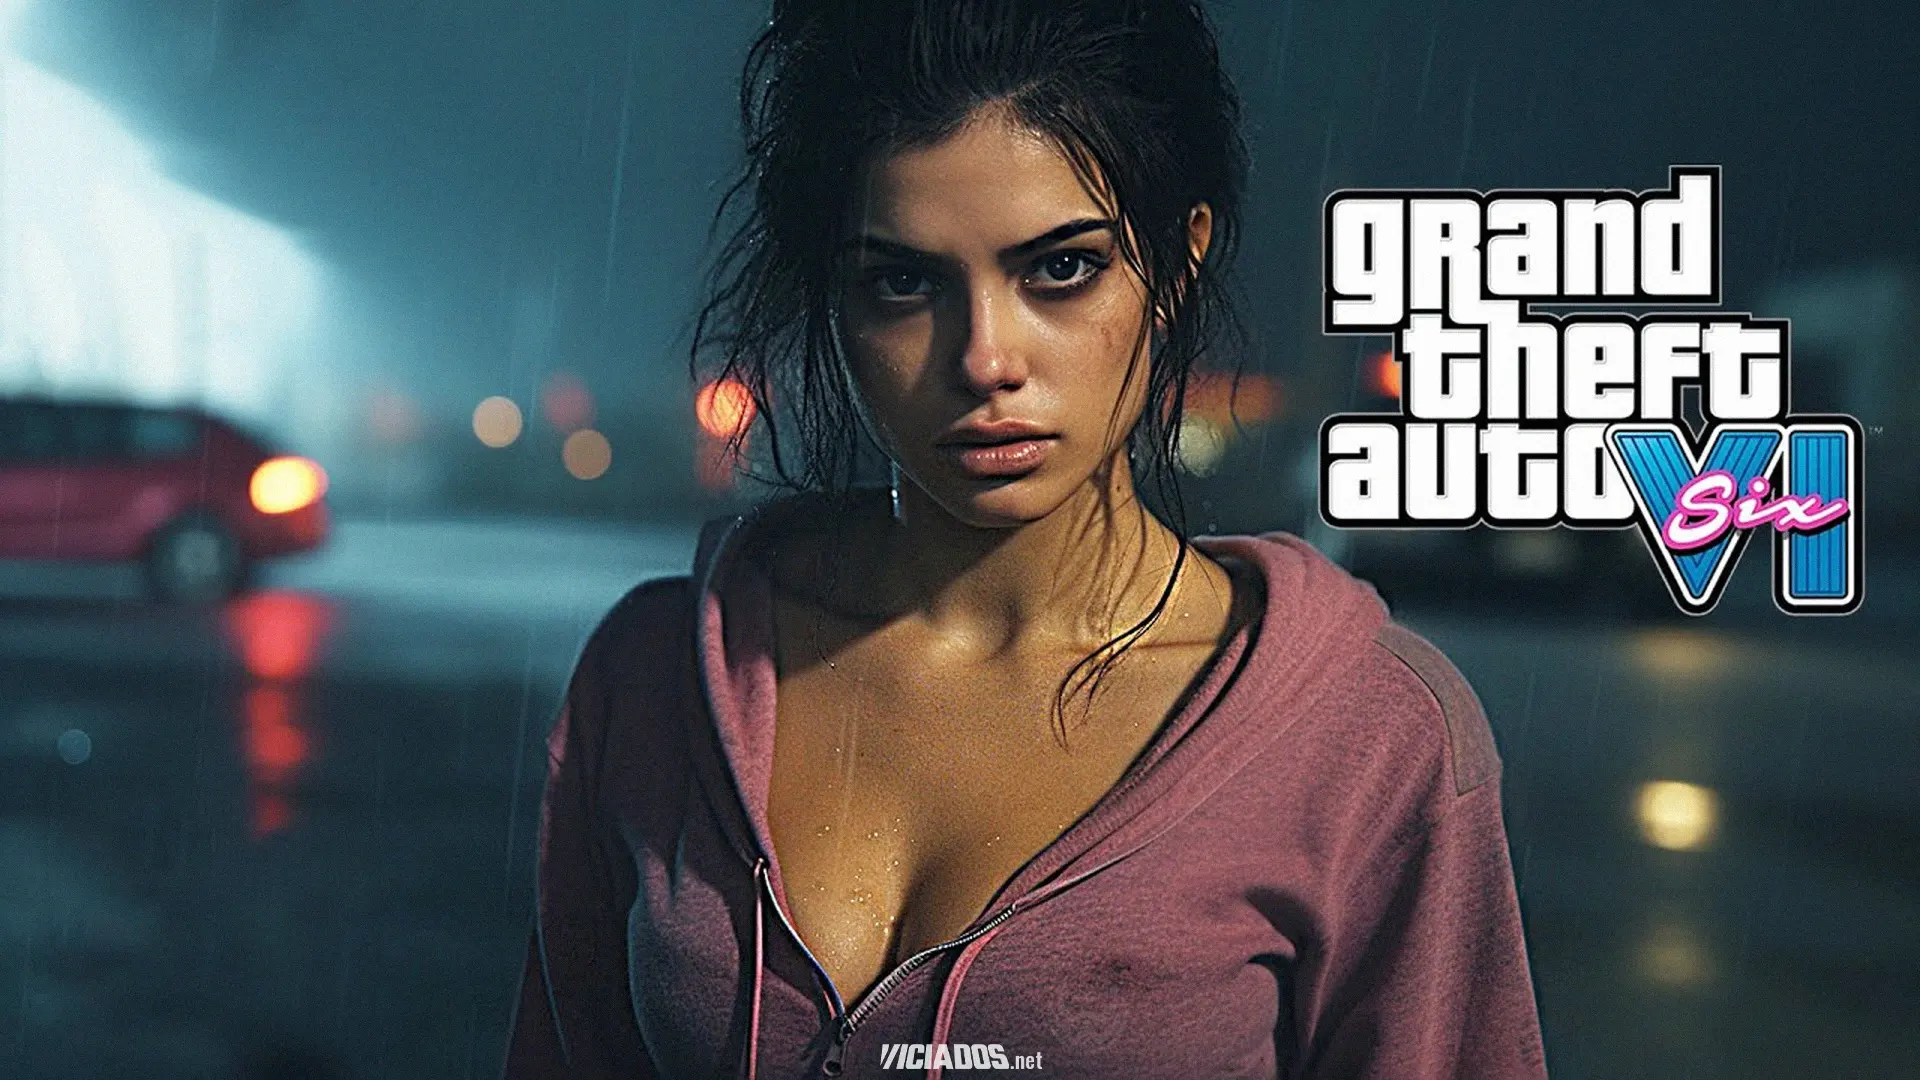 Vazou! Dona da Rockstar Games divulga acidentalmente nome final de GTA 6 2024 Portal Viciados